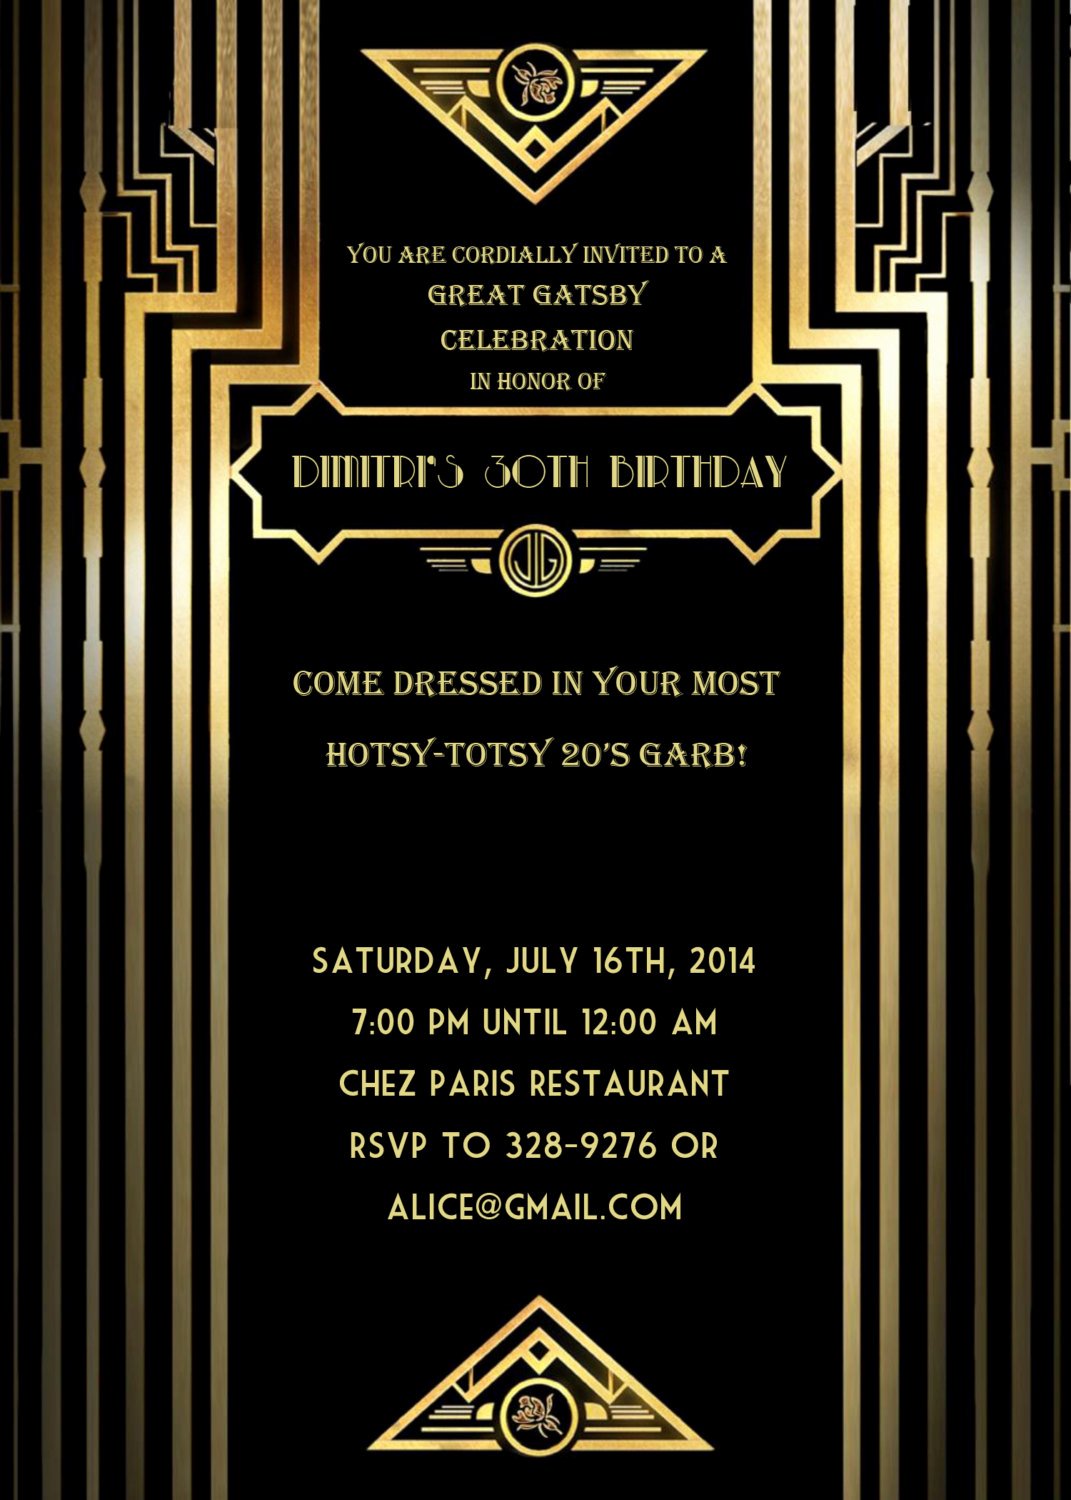 Great Gatsby Prom Invitations Lovely Great Gatsby Style Art Deco Party Invitation Prom Birthday